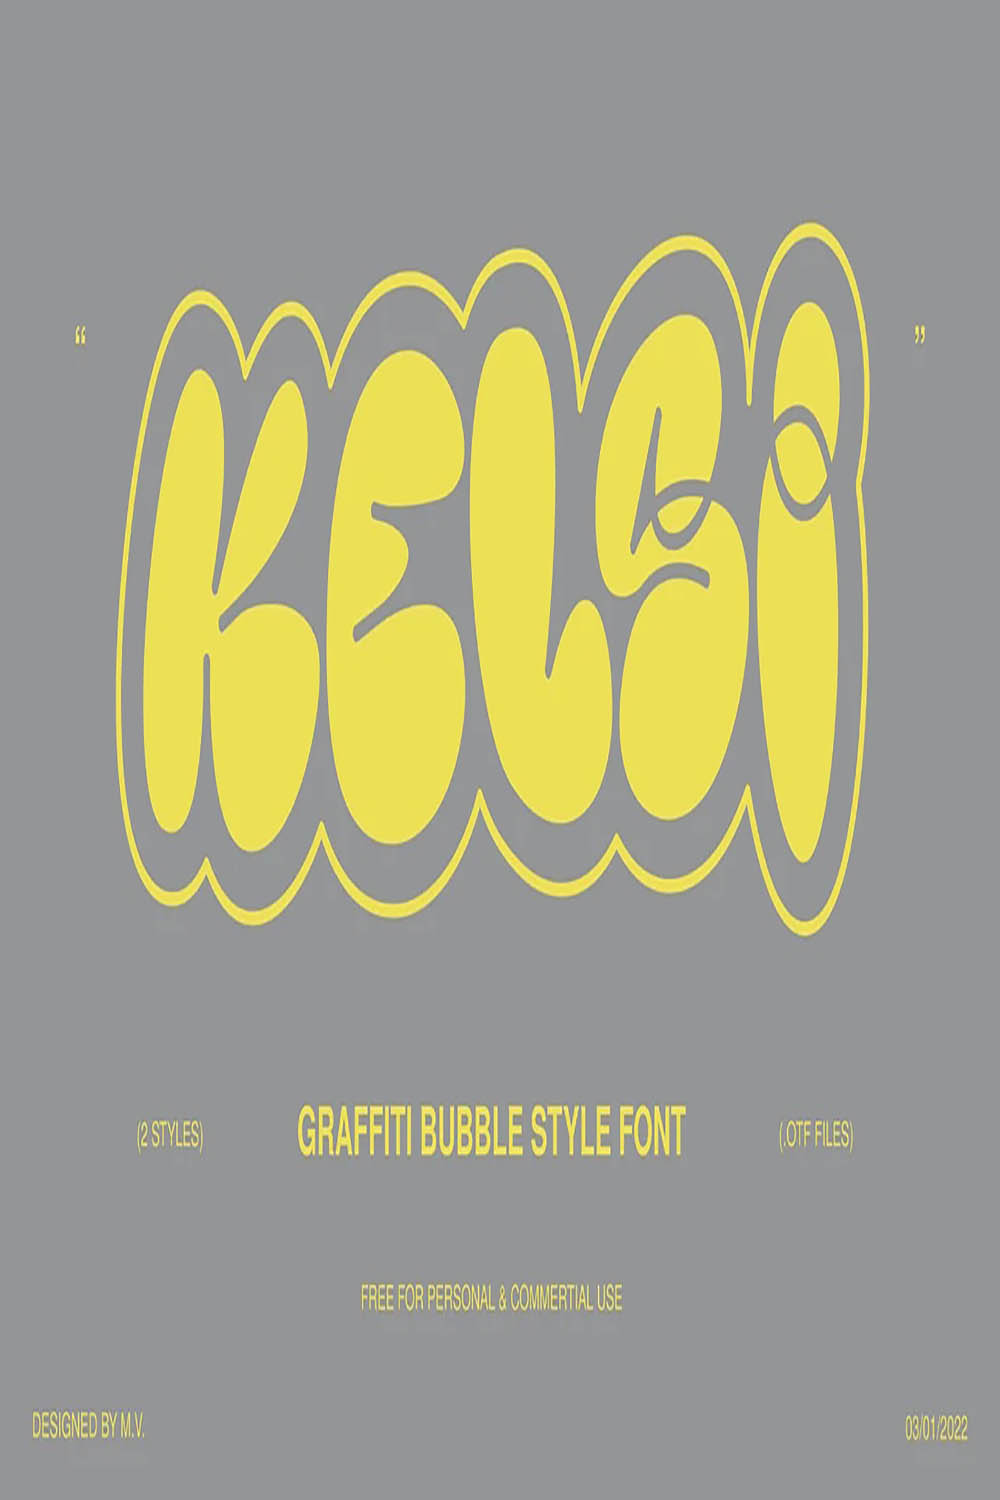 Kelsi graffiti bubble style font pinterest preview image.